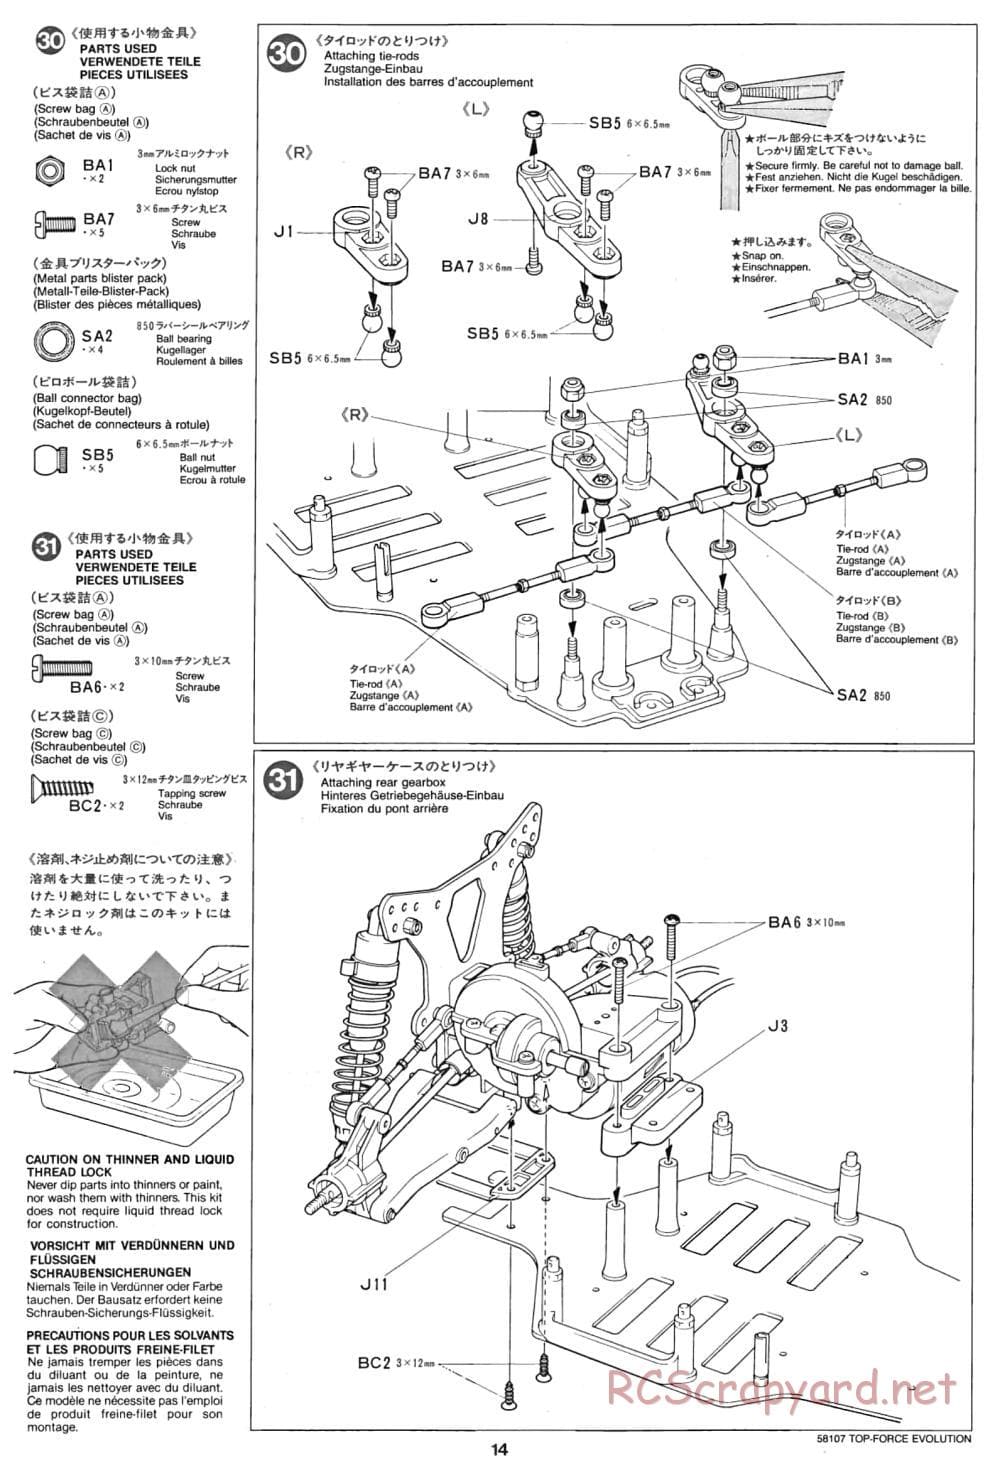 Tamiya - Top Force Evolution Chassis - Manual - Page 14